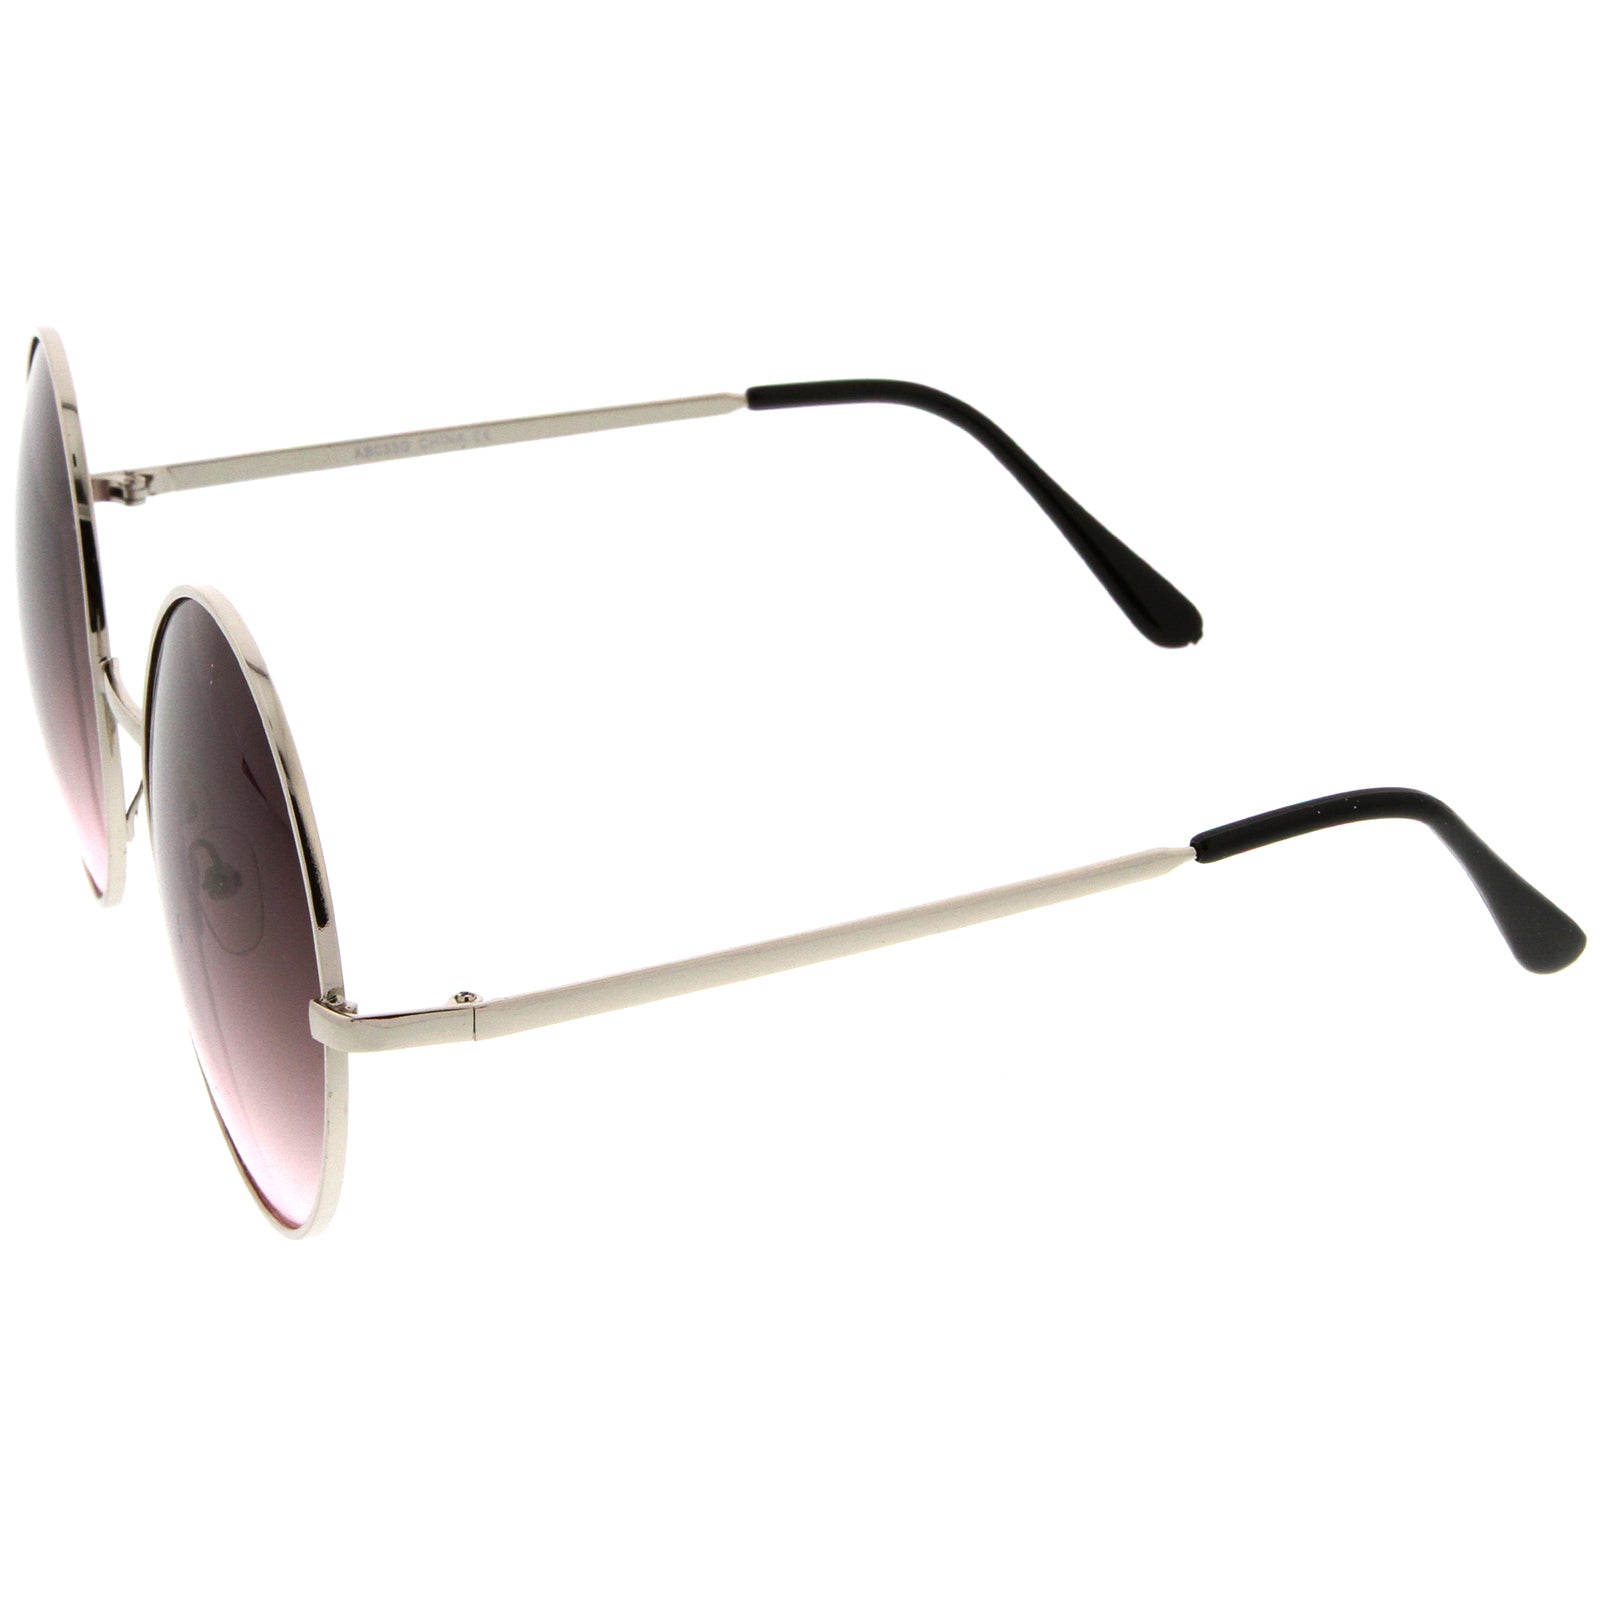 Super Large Oversize Slim Temple Round Sunglasses 61mm, Silver / Smoke